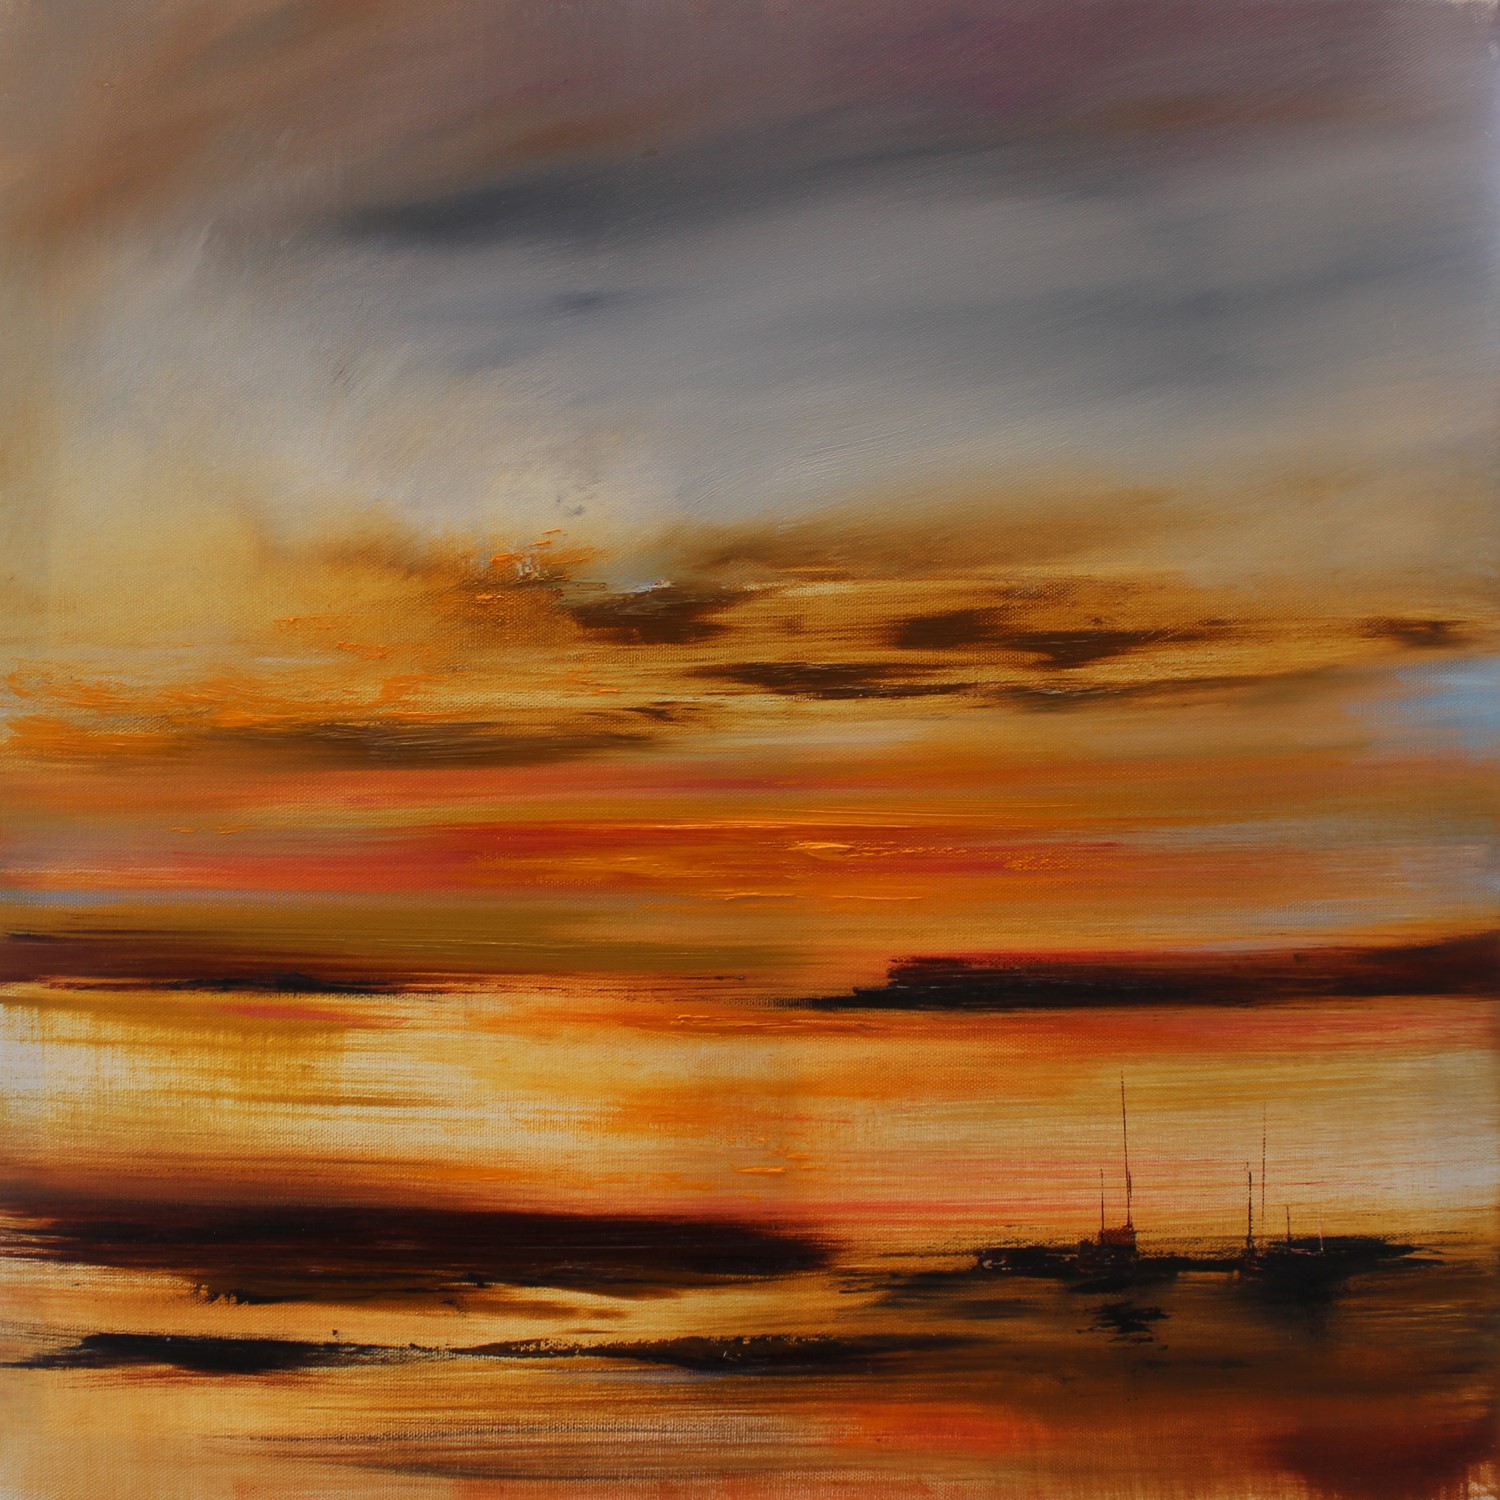 'A Sleepy Sunset' by artist Rosanne Barr